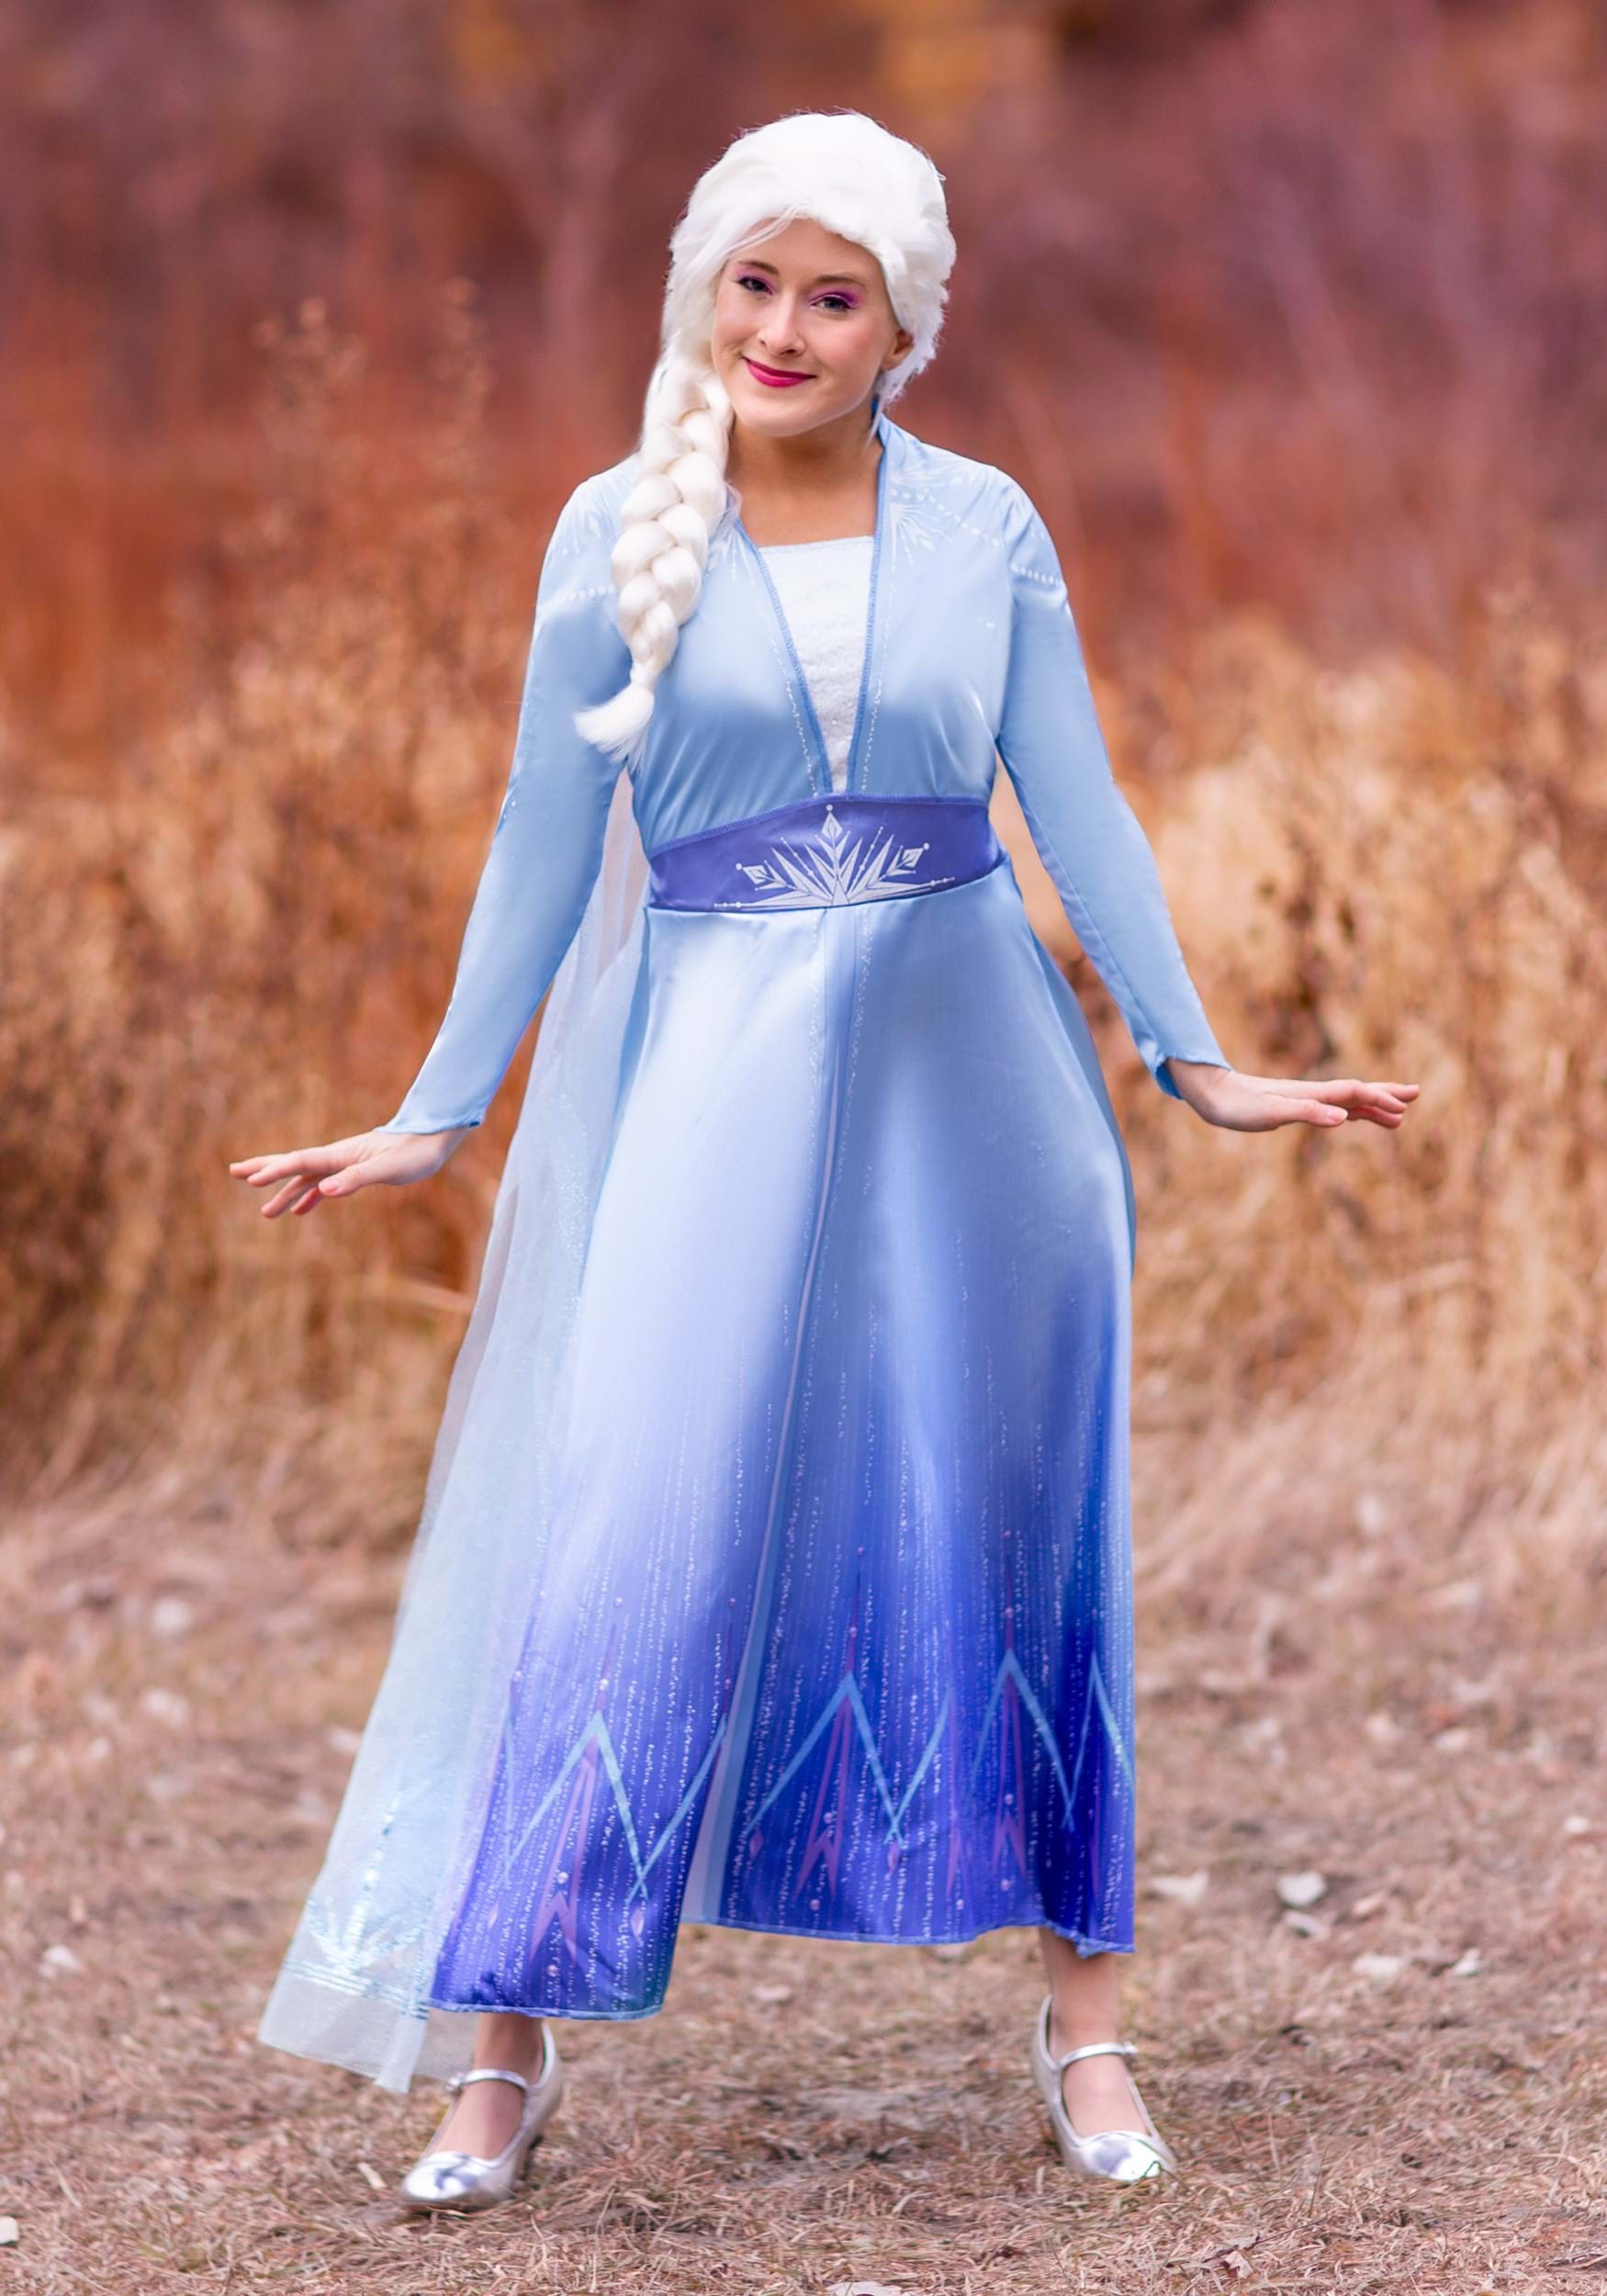 Elsa 10th Anniversary Deluxe Costume For Kids, Frozen